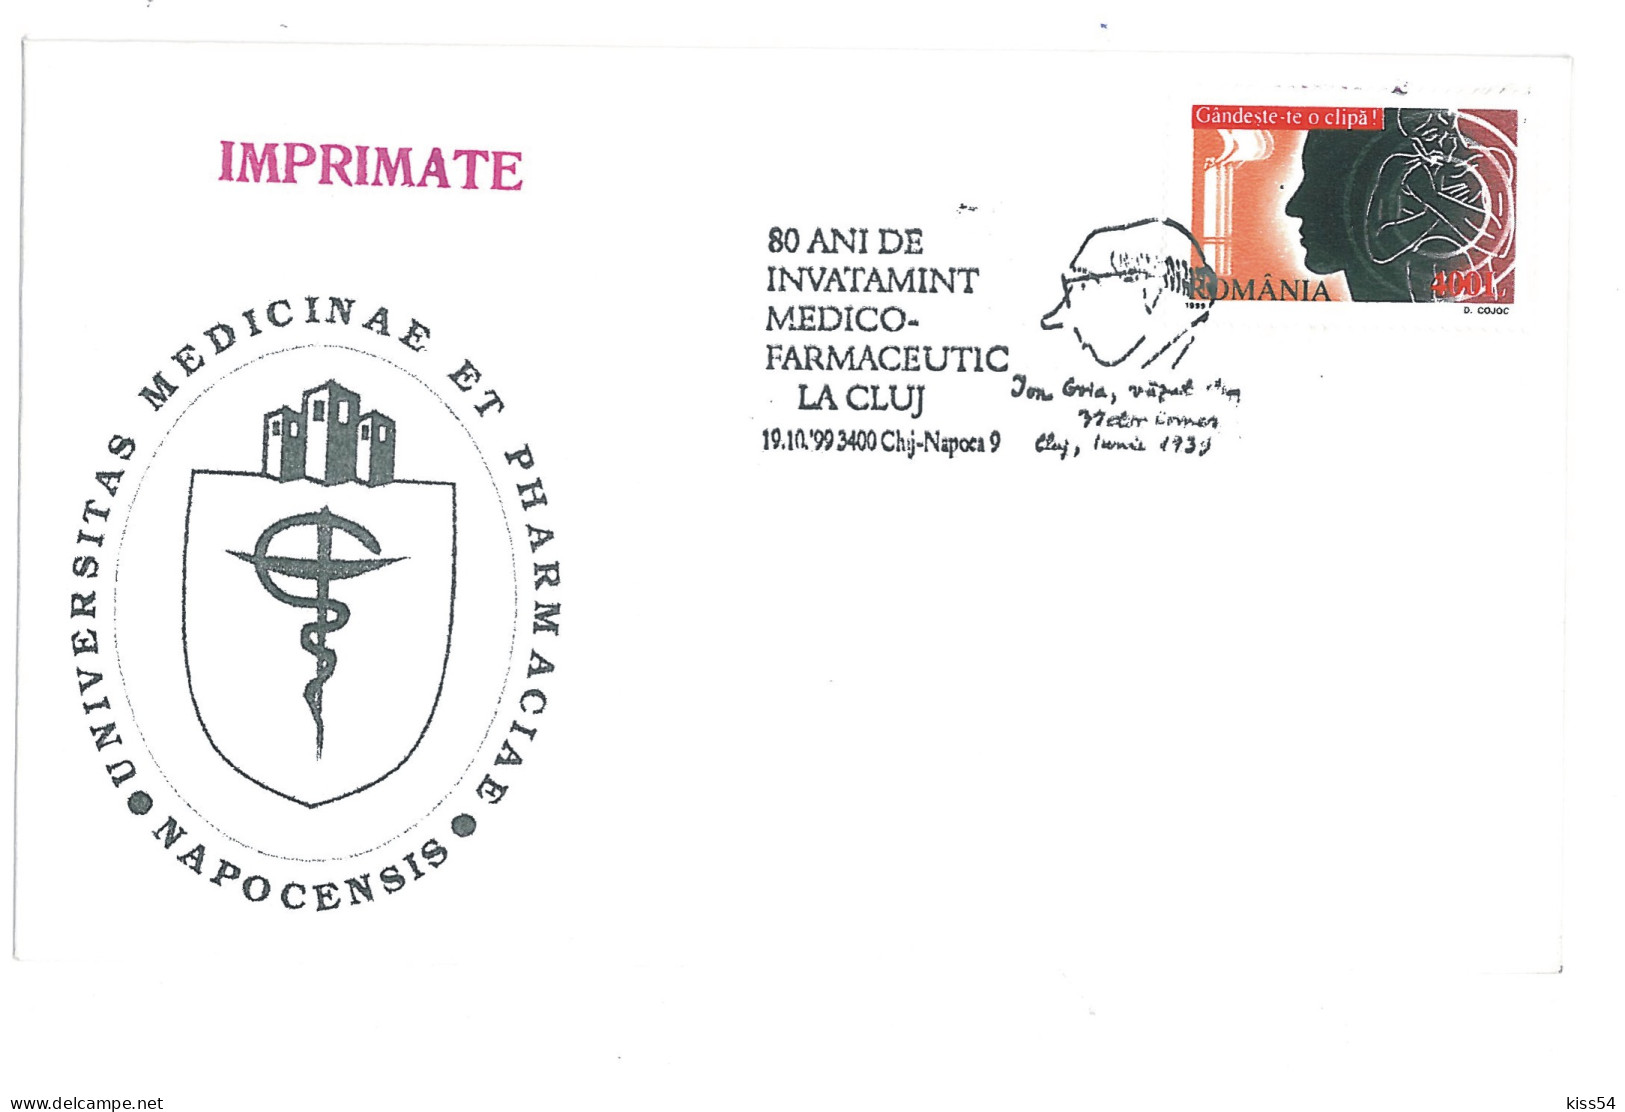 COV 88 - 302 Medical-Pharmaceutical Education, Romania - Cover - Used - 1999 - Pharmacy